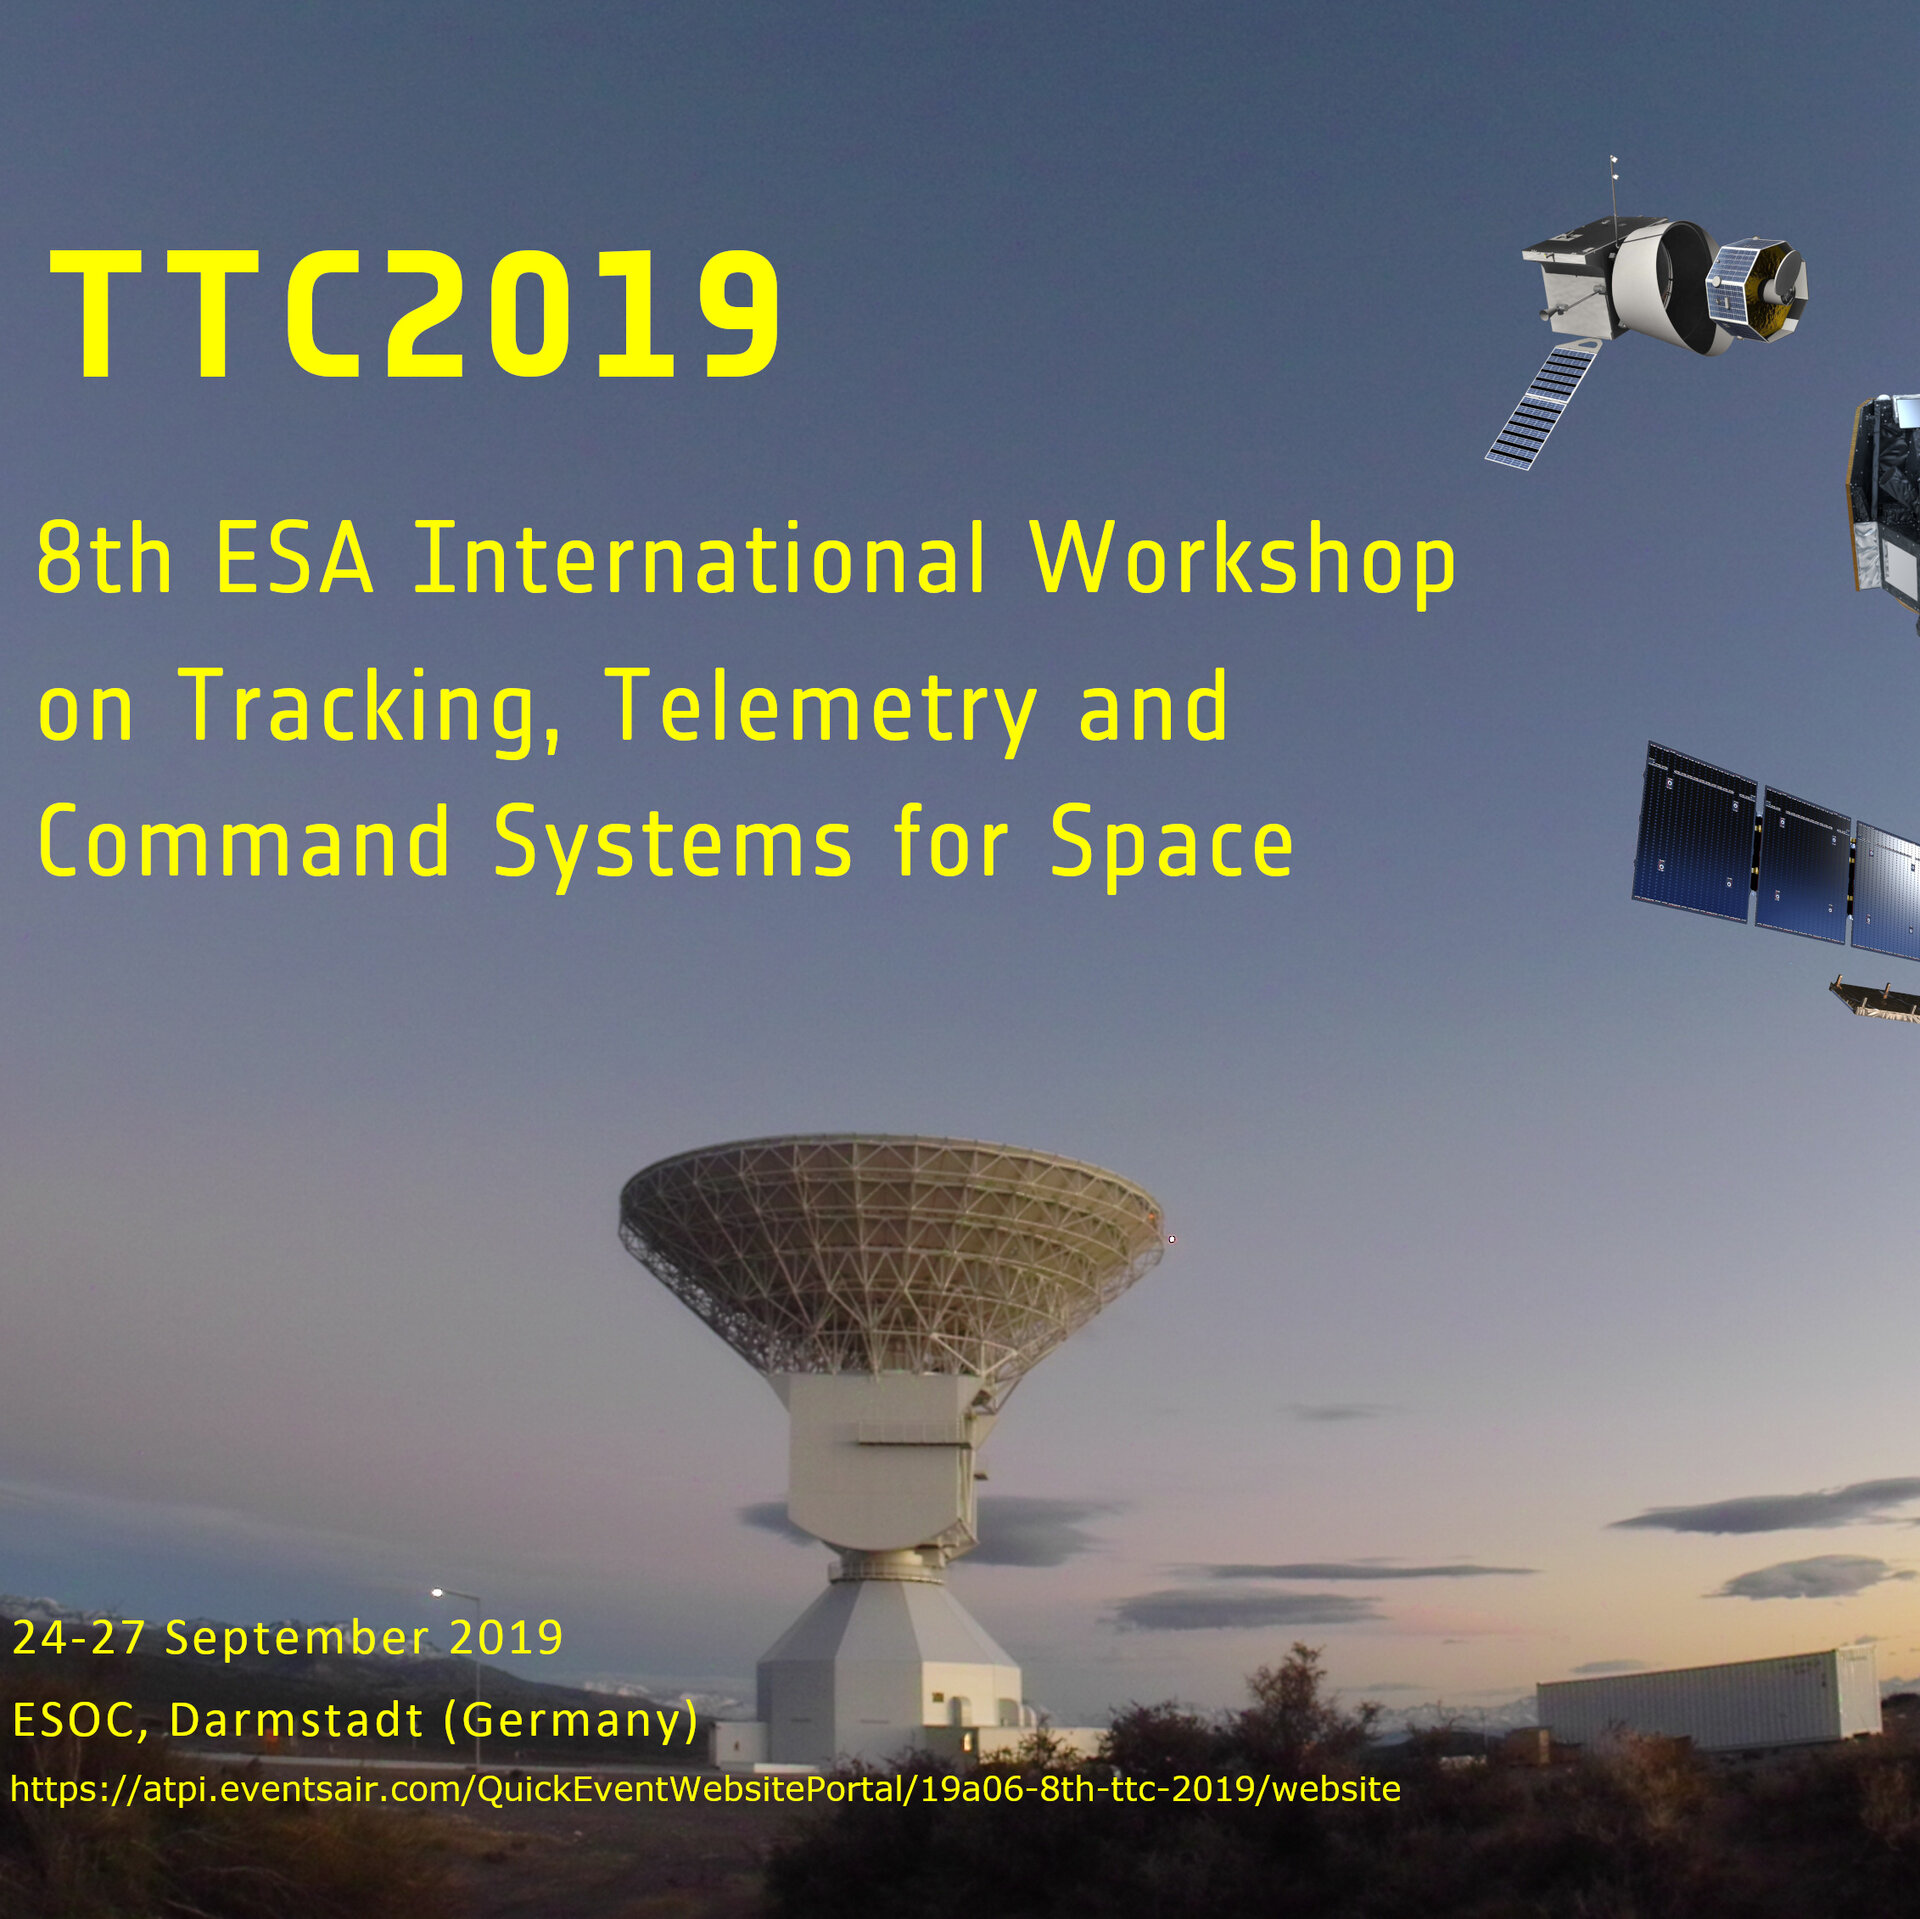 TTC workshop 2019